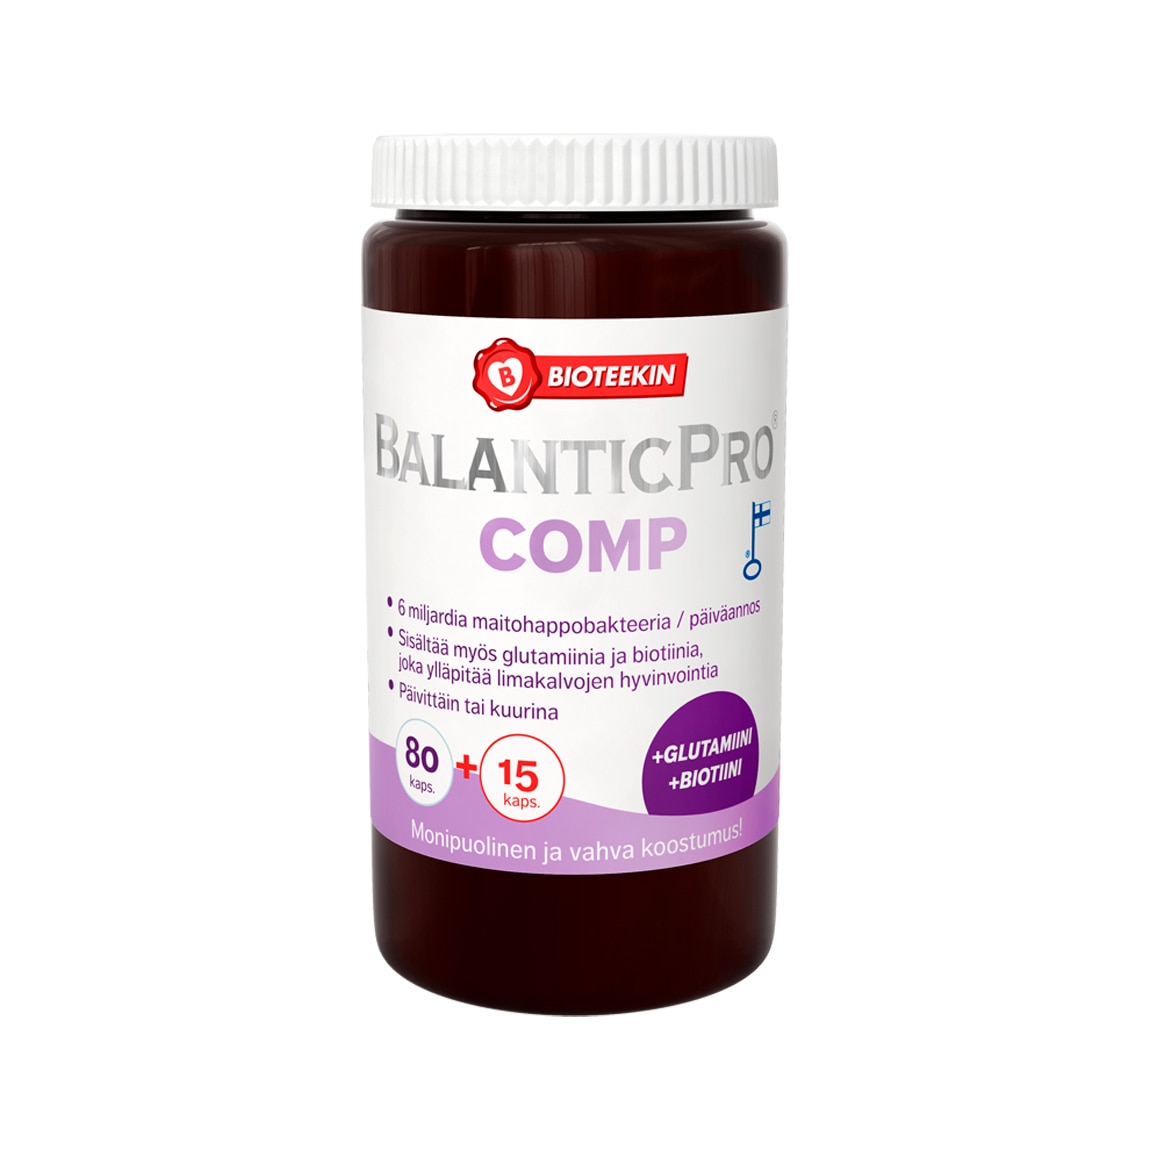 BalanticPro Comp 80 + 15 kaps